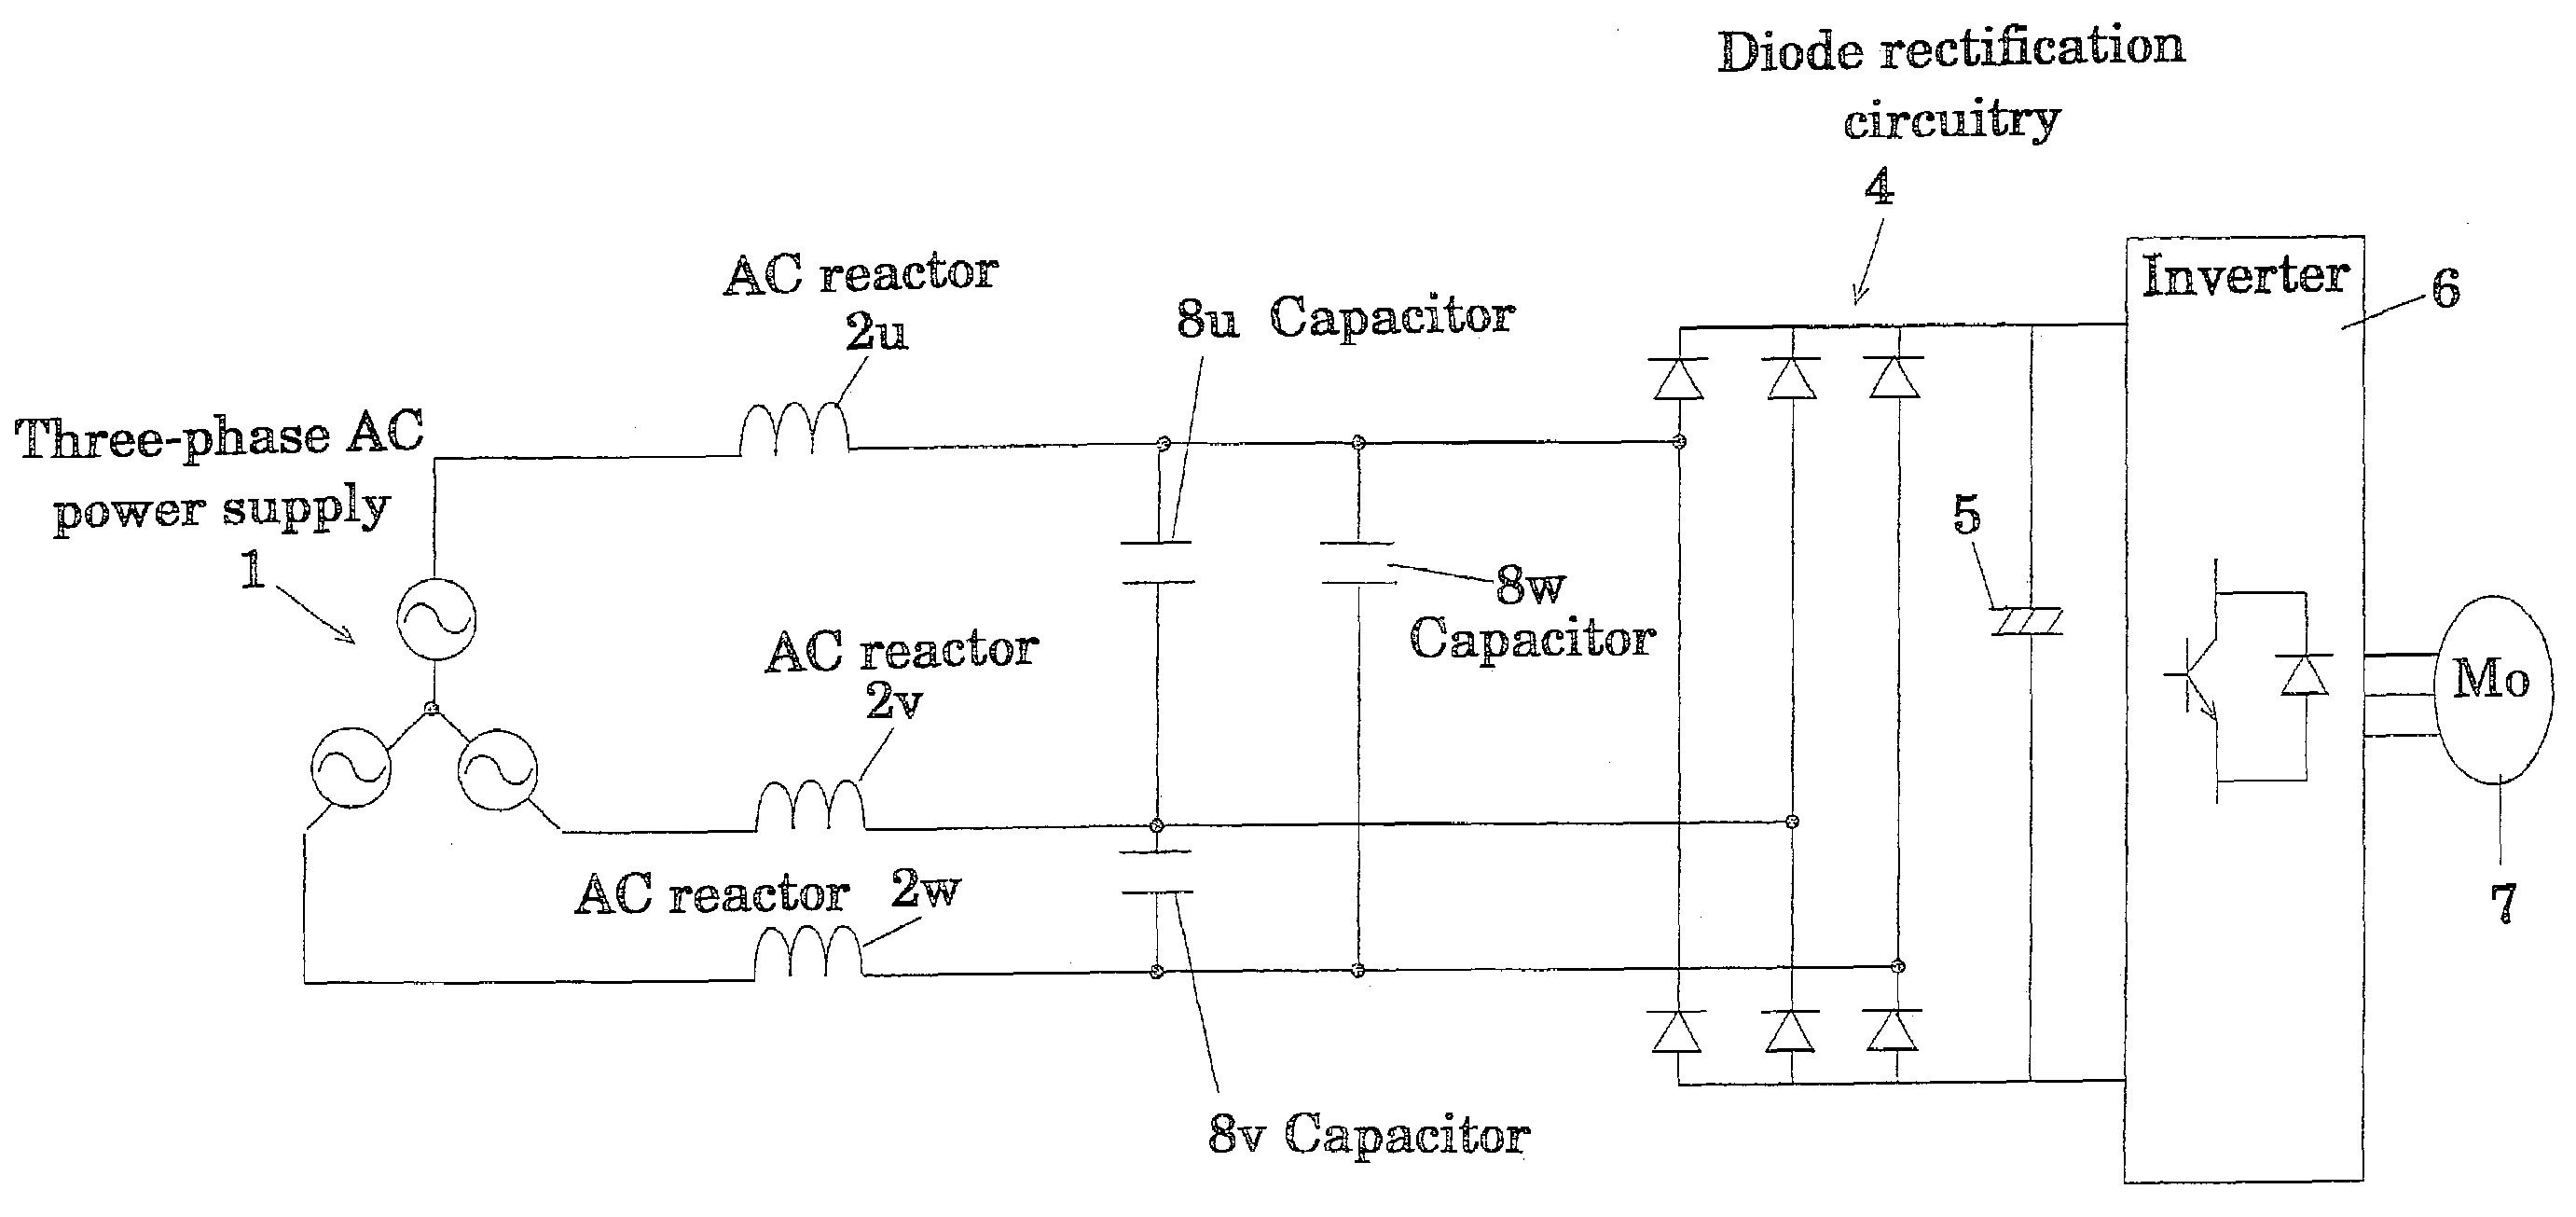 Three-phase rectifier